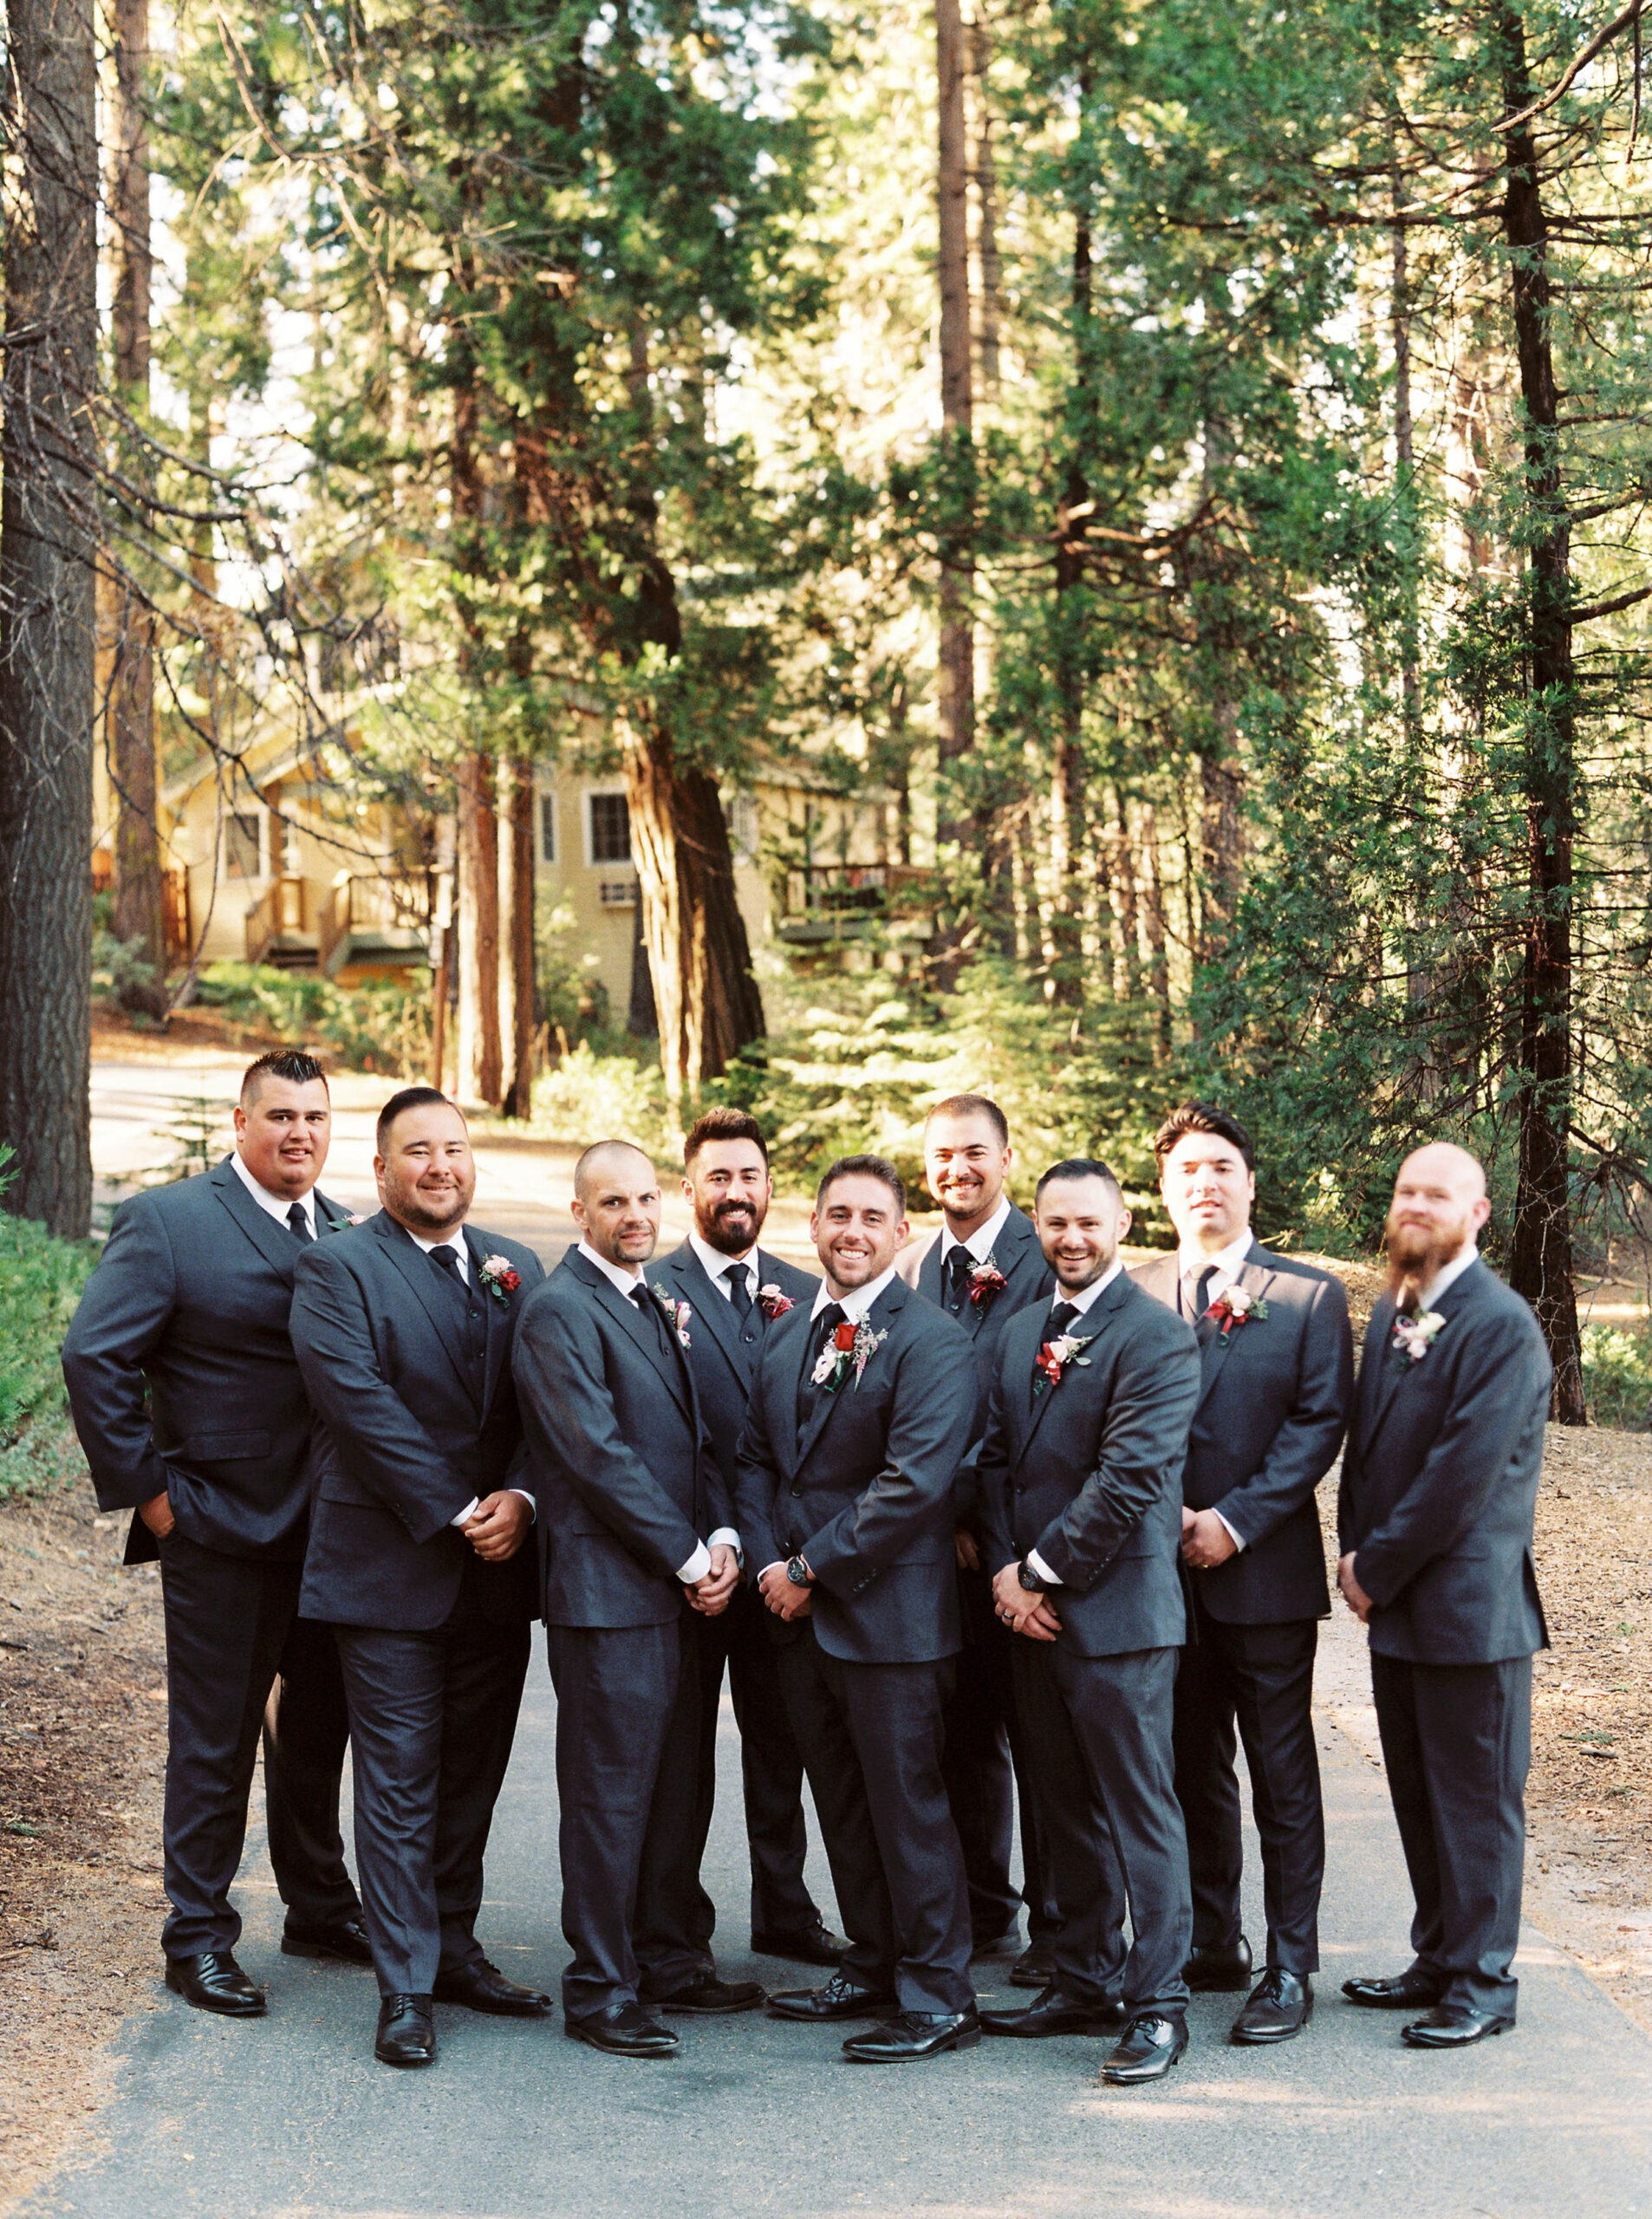 Tenaya-lodge-wedding-at-yosemite-national-park-california-96.jpg